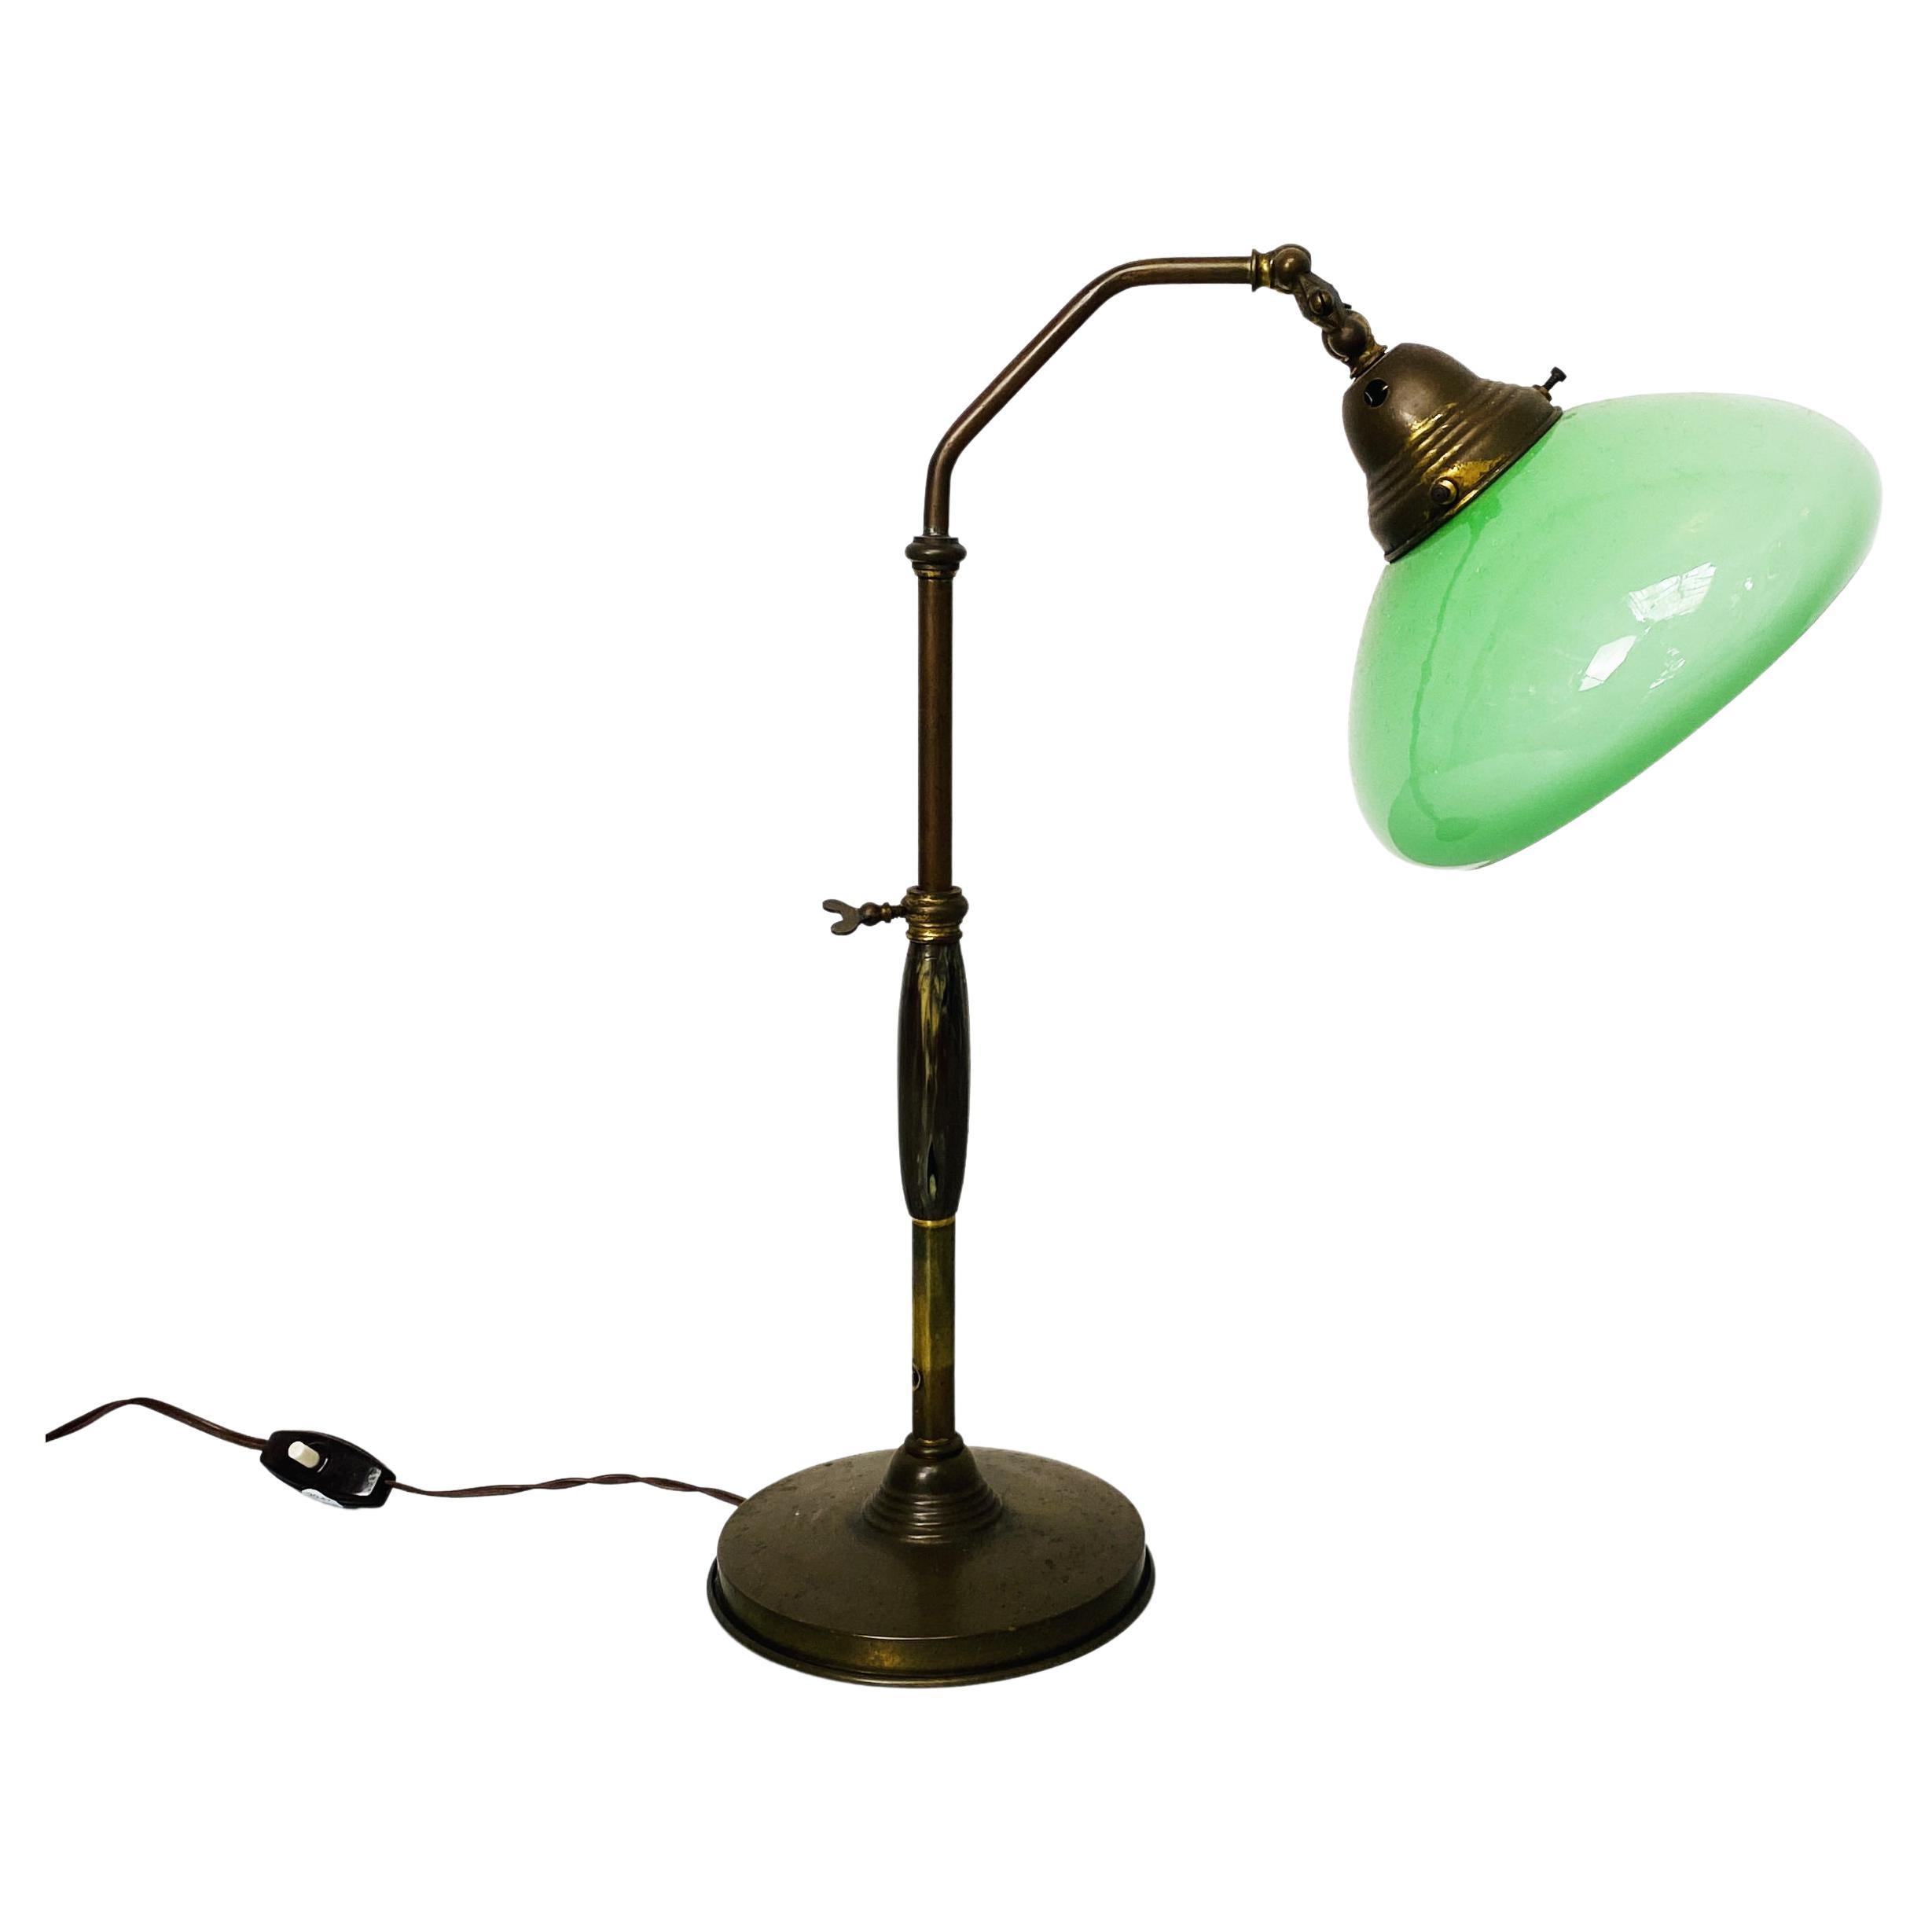 Italian Art Deco Ministerial Table Lamp in Metal, Green Glass and Bakelite, 1930